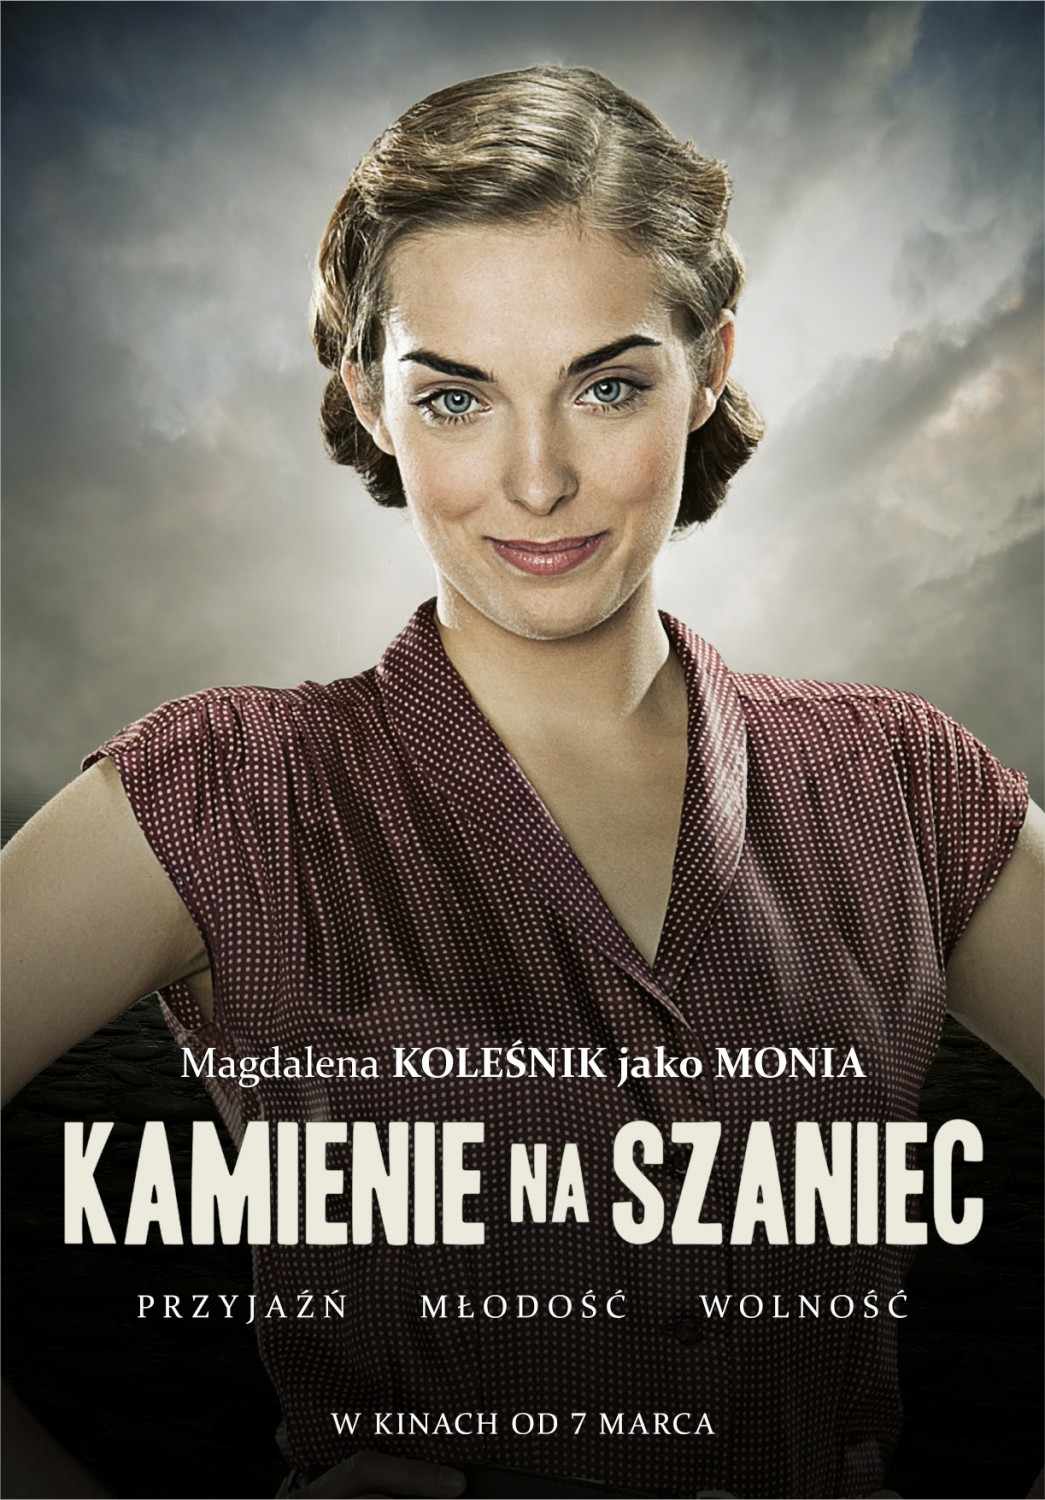 Extra Large Movie Poster Image for Kamienie na szaniec (#5 of 8)